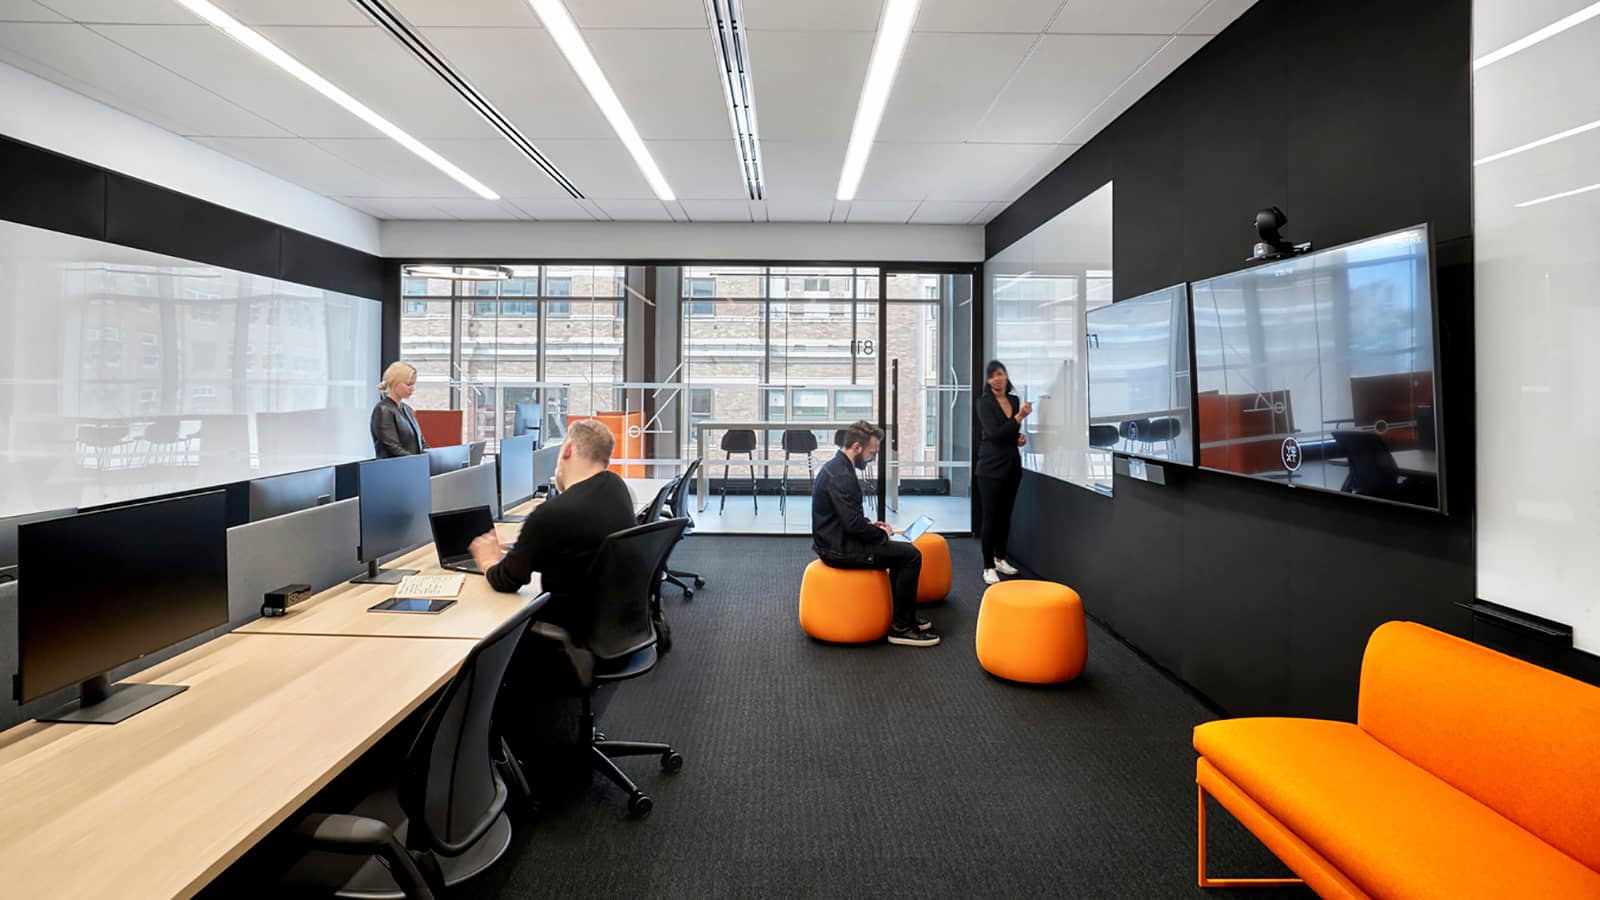 Yext NYC offers flexible seating around standing desks